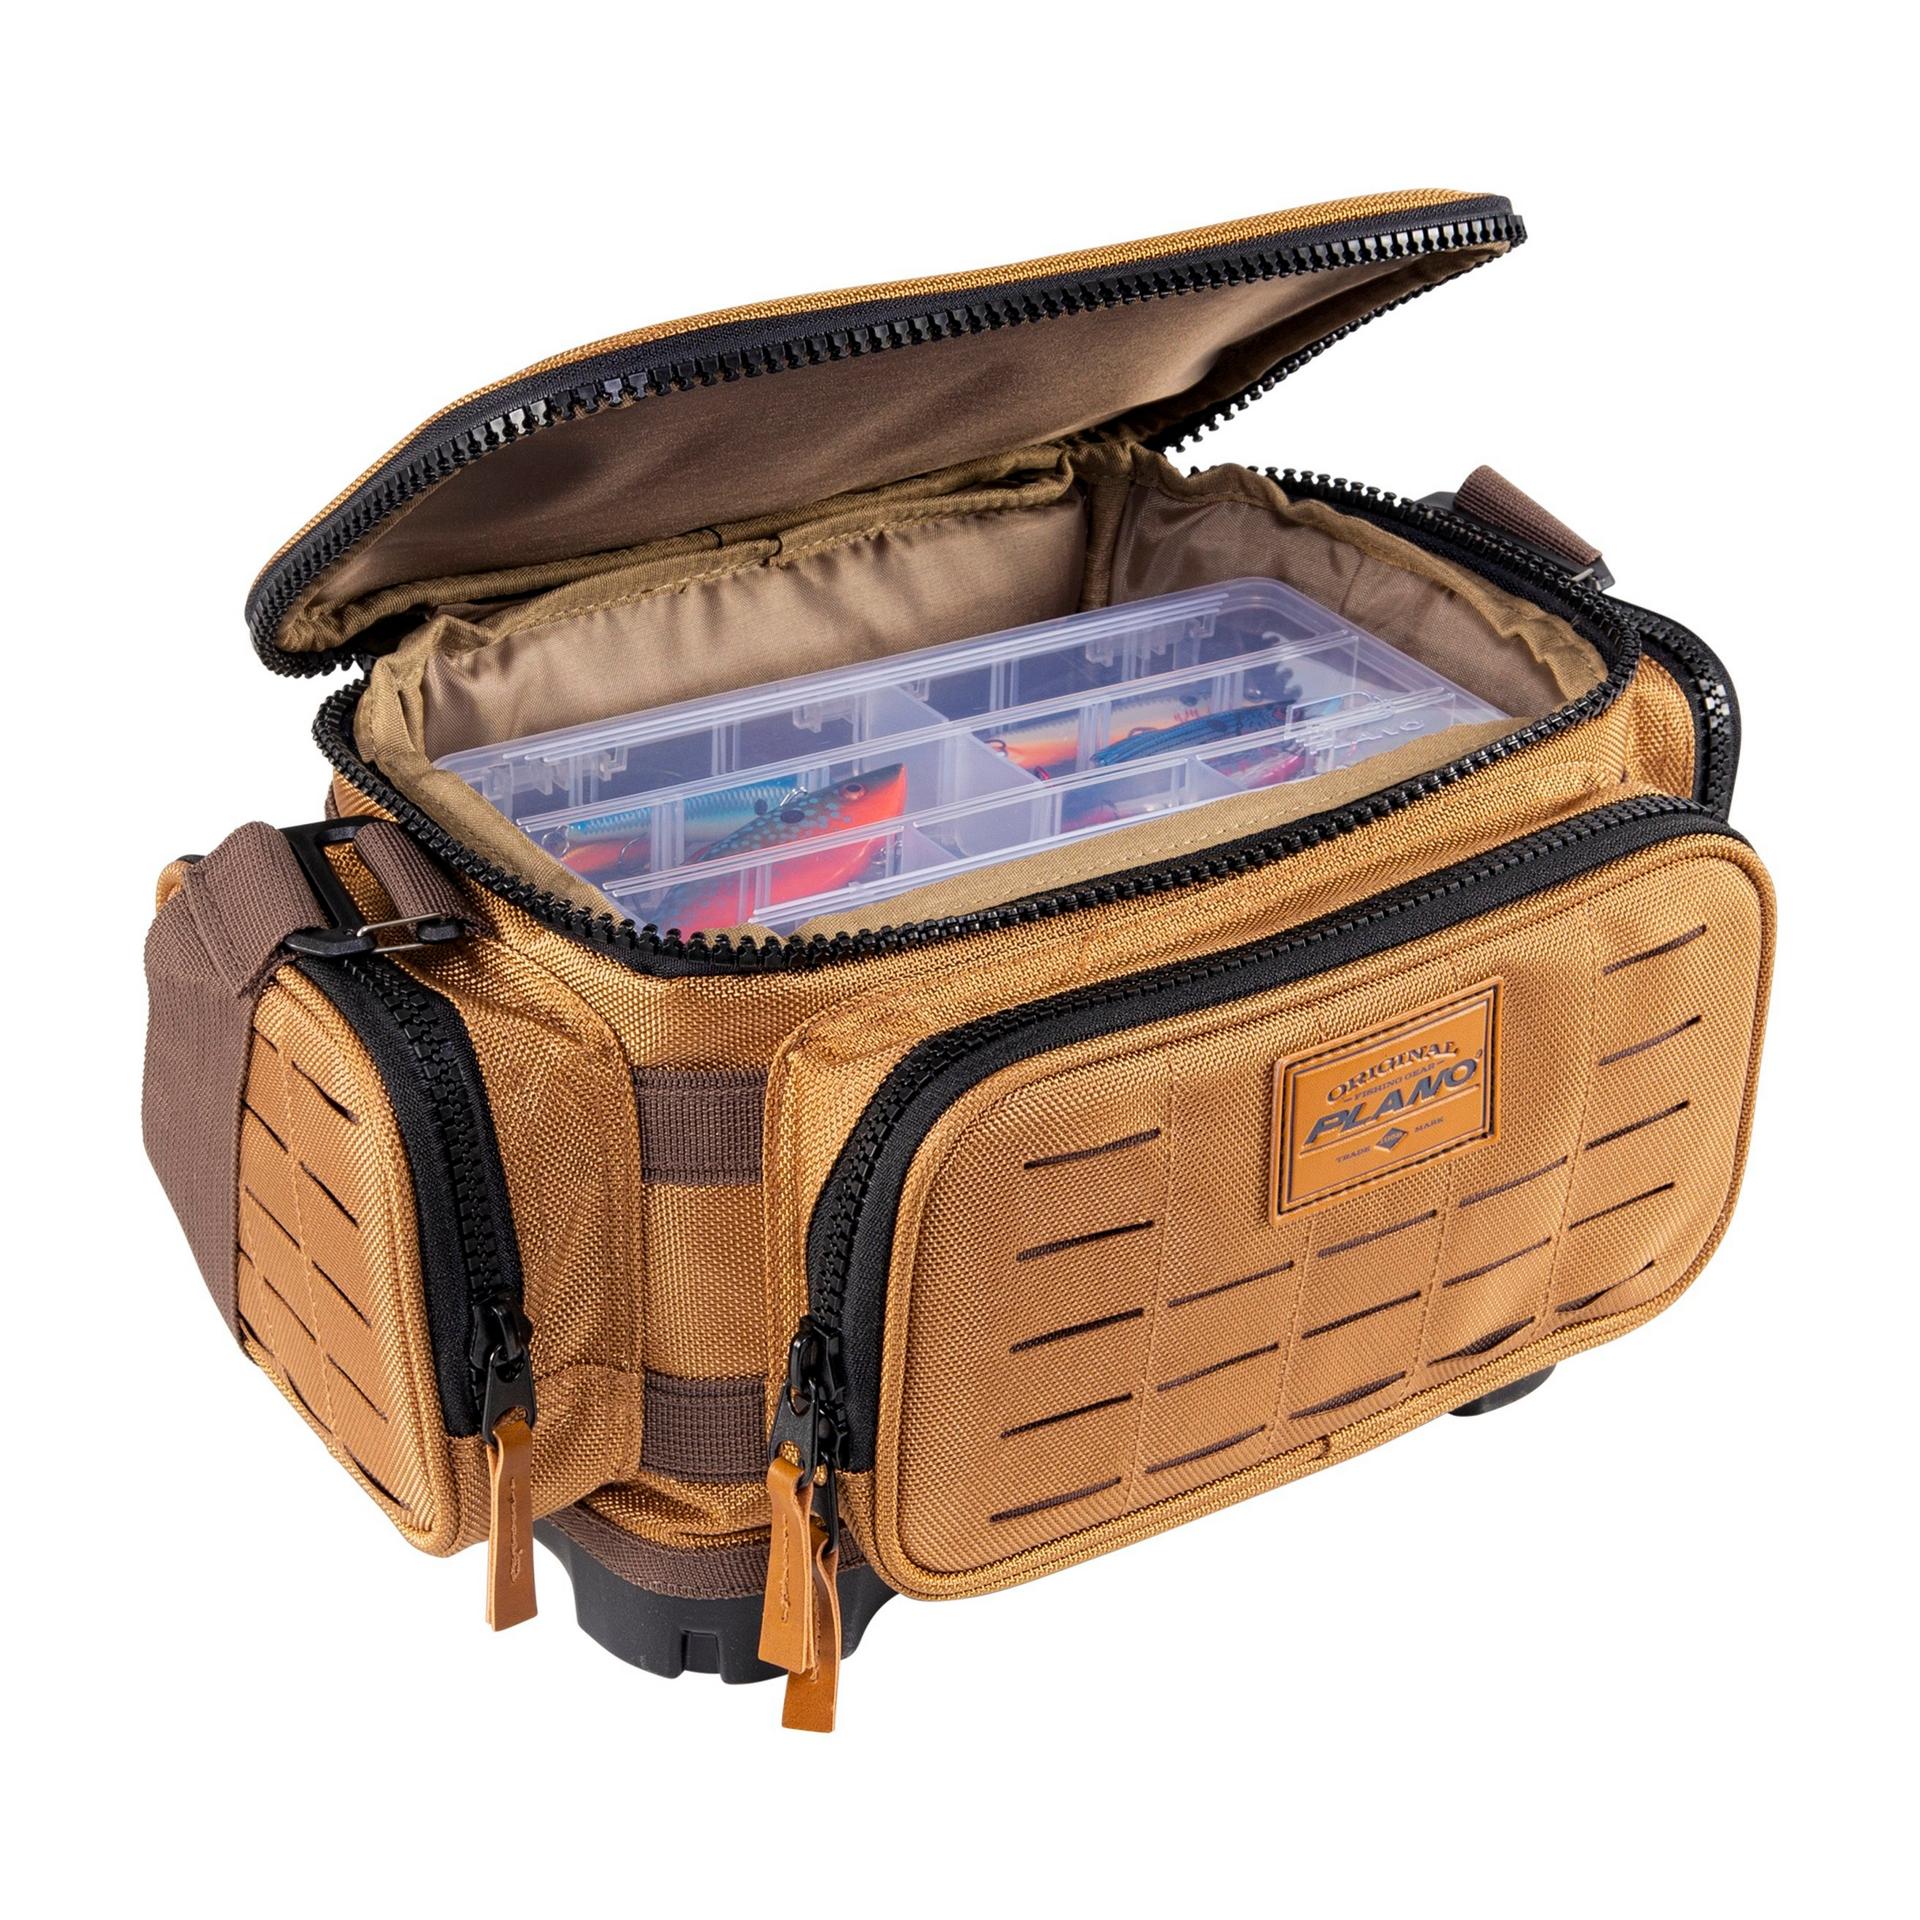 Guide Series Tackle Bag 3500 | Plano®